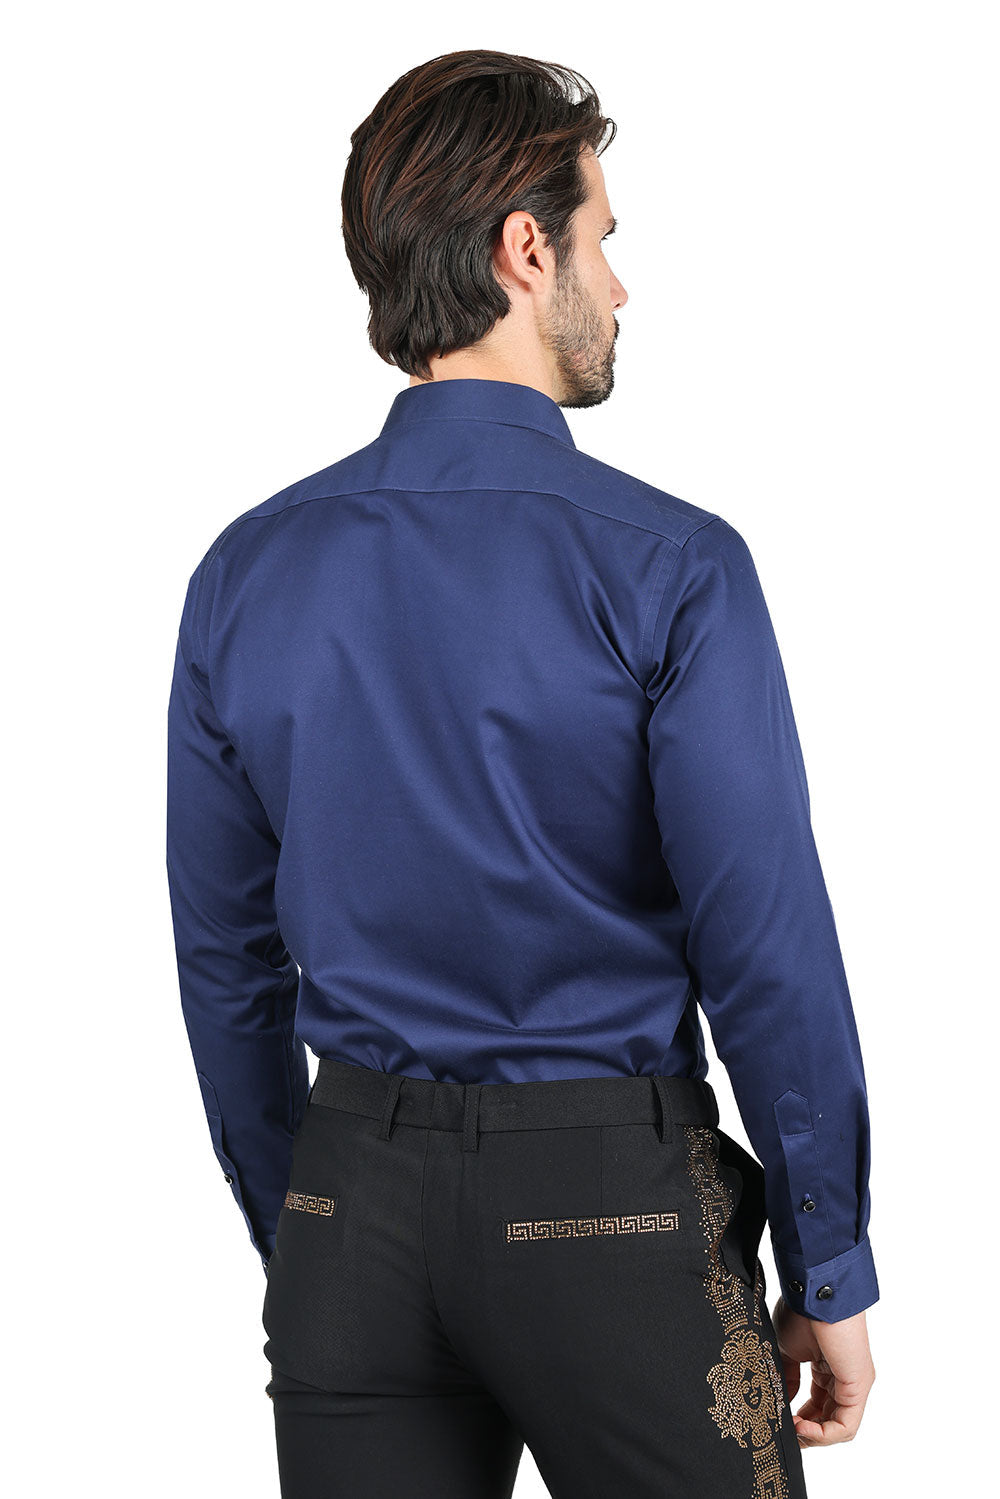 BARABAS Men's Solid Basic Palin Premium Button Down Dress Shirts 2DPS01 Navy